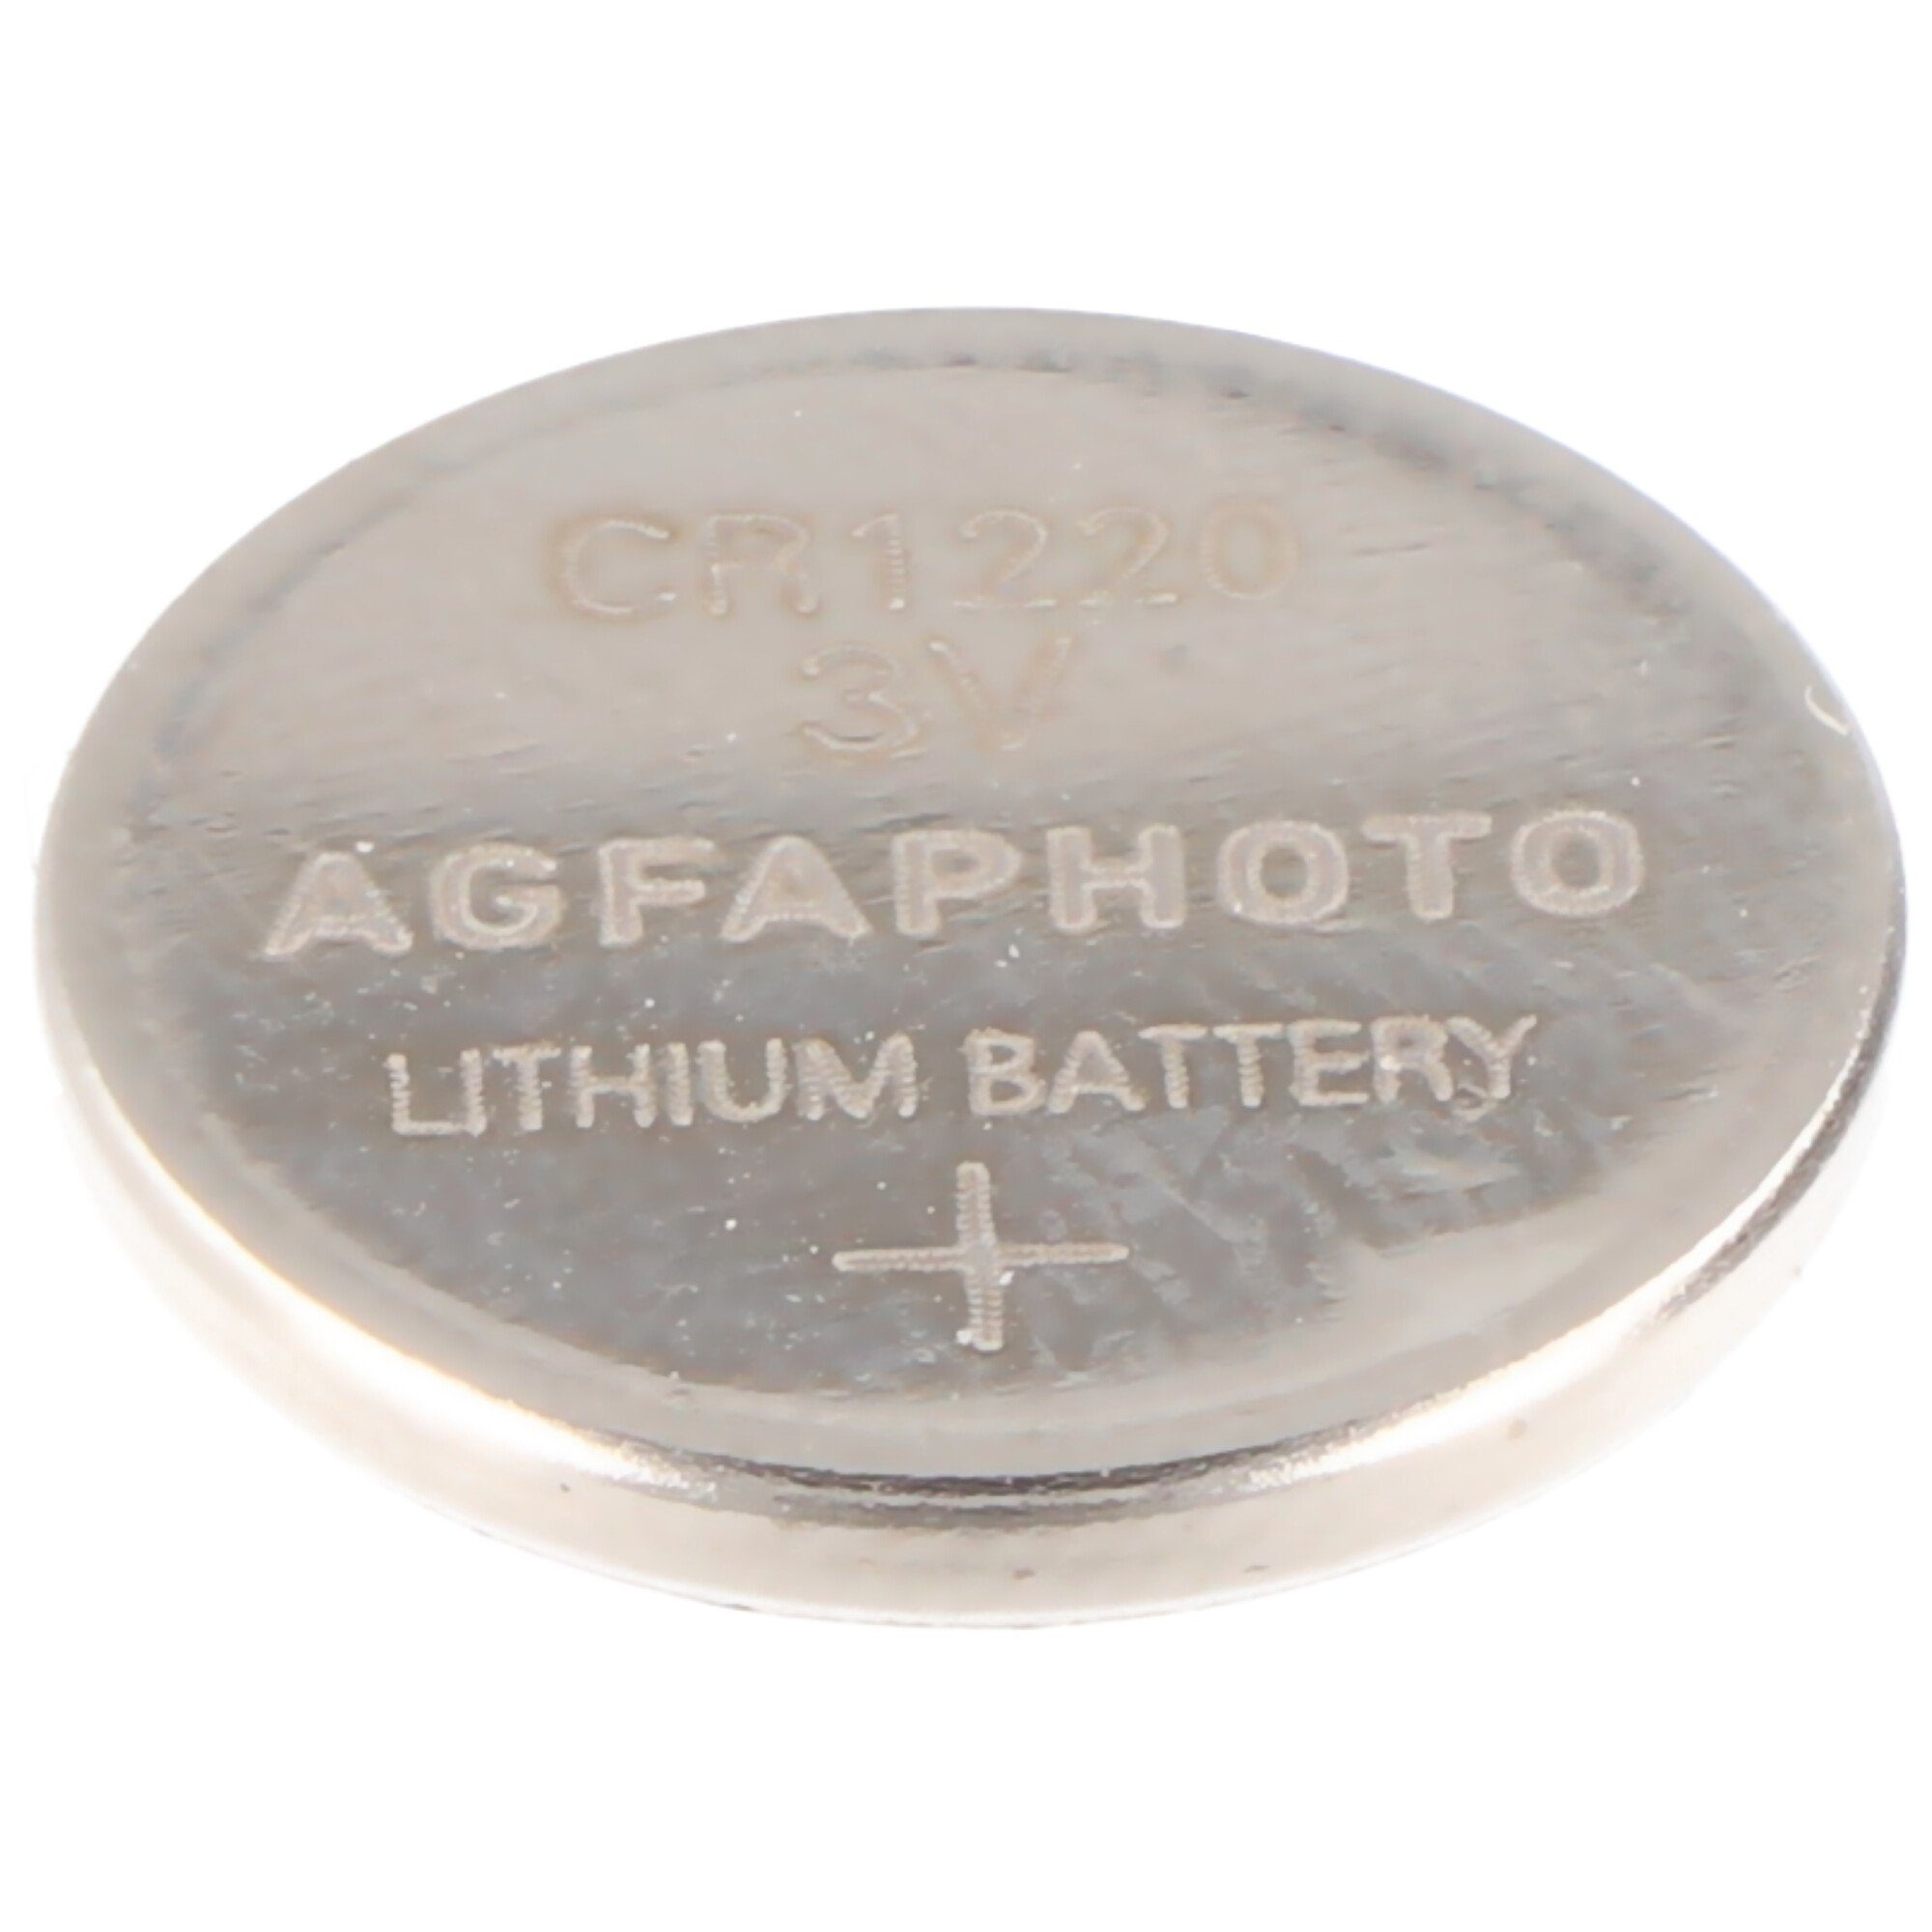 AgfaPhoto Agfaphoto Batterie Lithium, 3V Bl Knopfzelle, Extreme, Retail CR1220, Knopfzelle